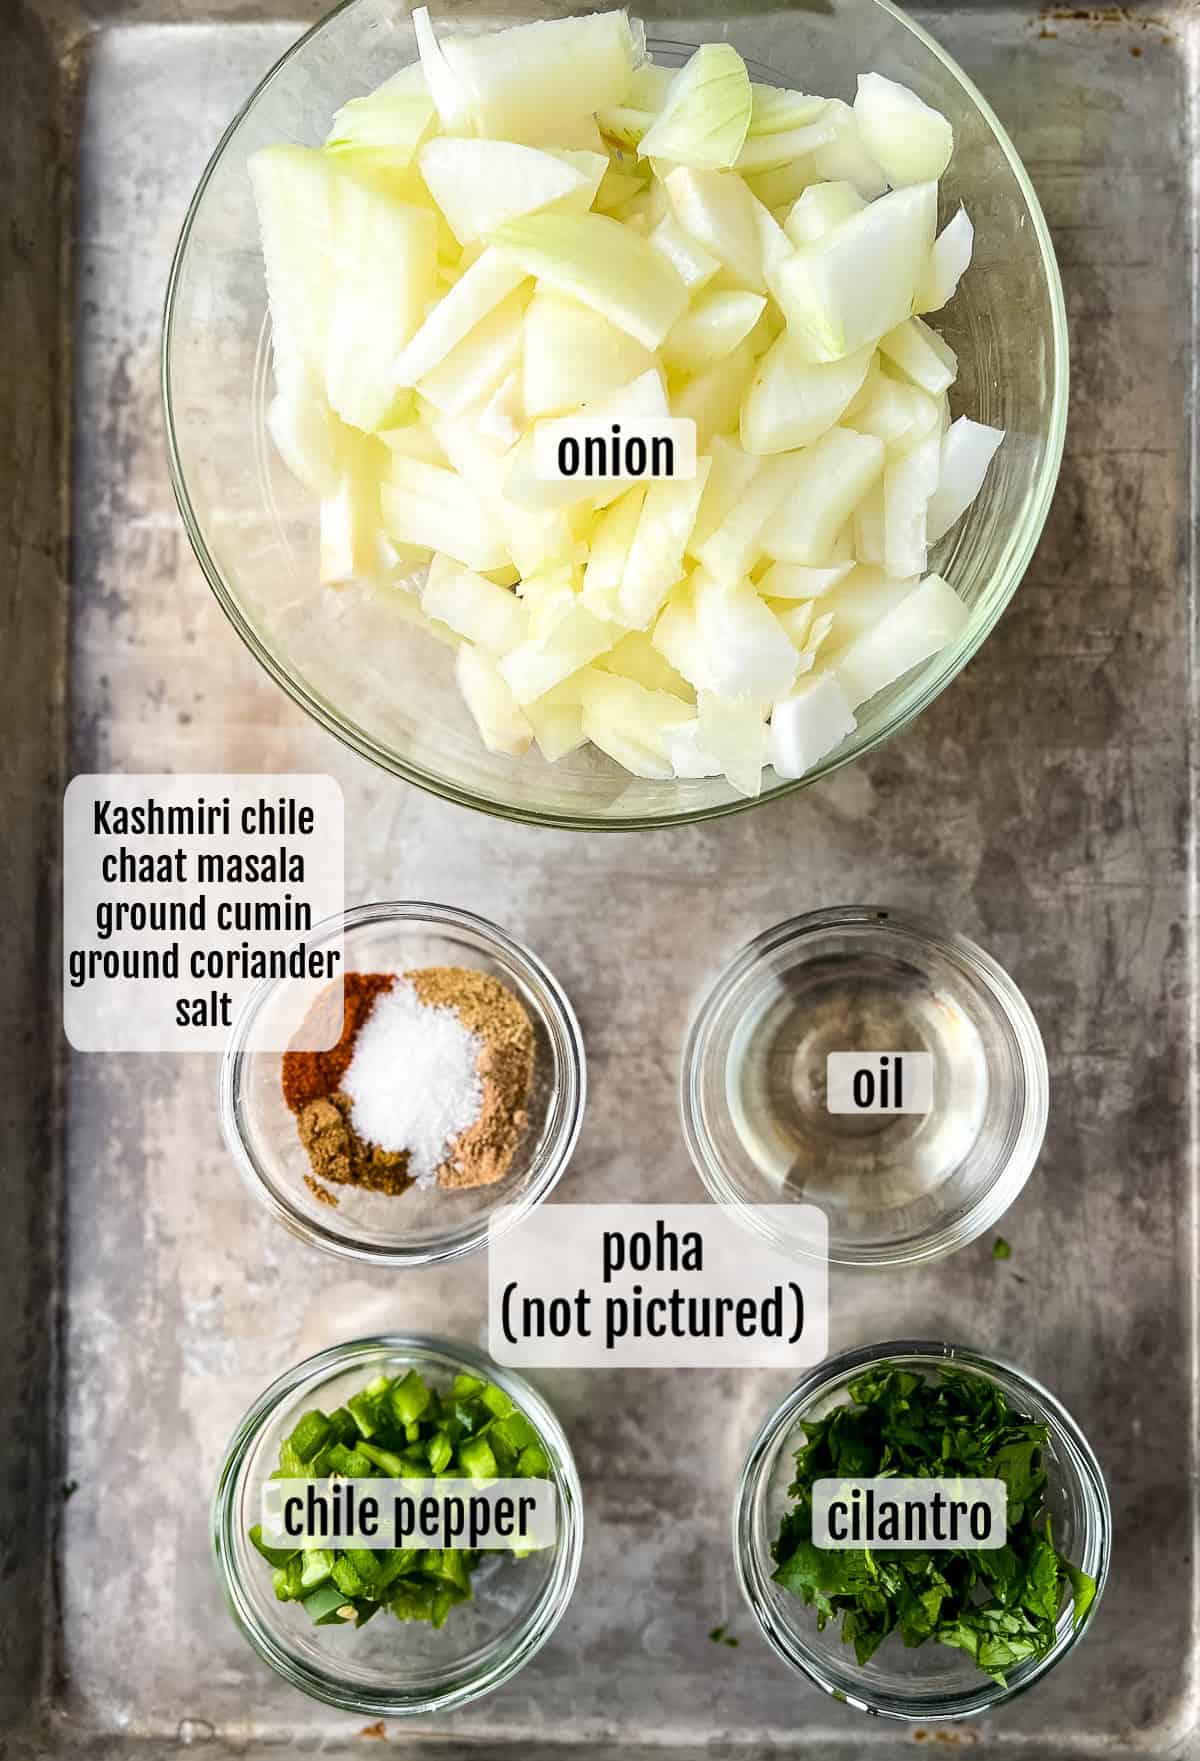 Overhead shot of the ingredients needed to make onion samosas.